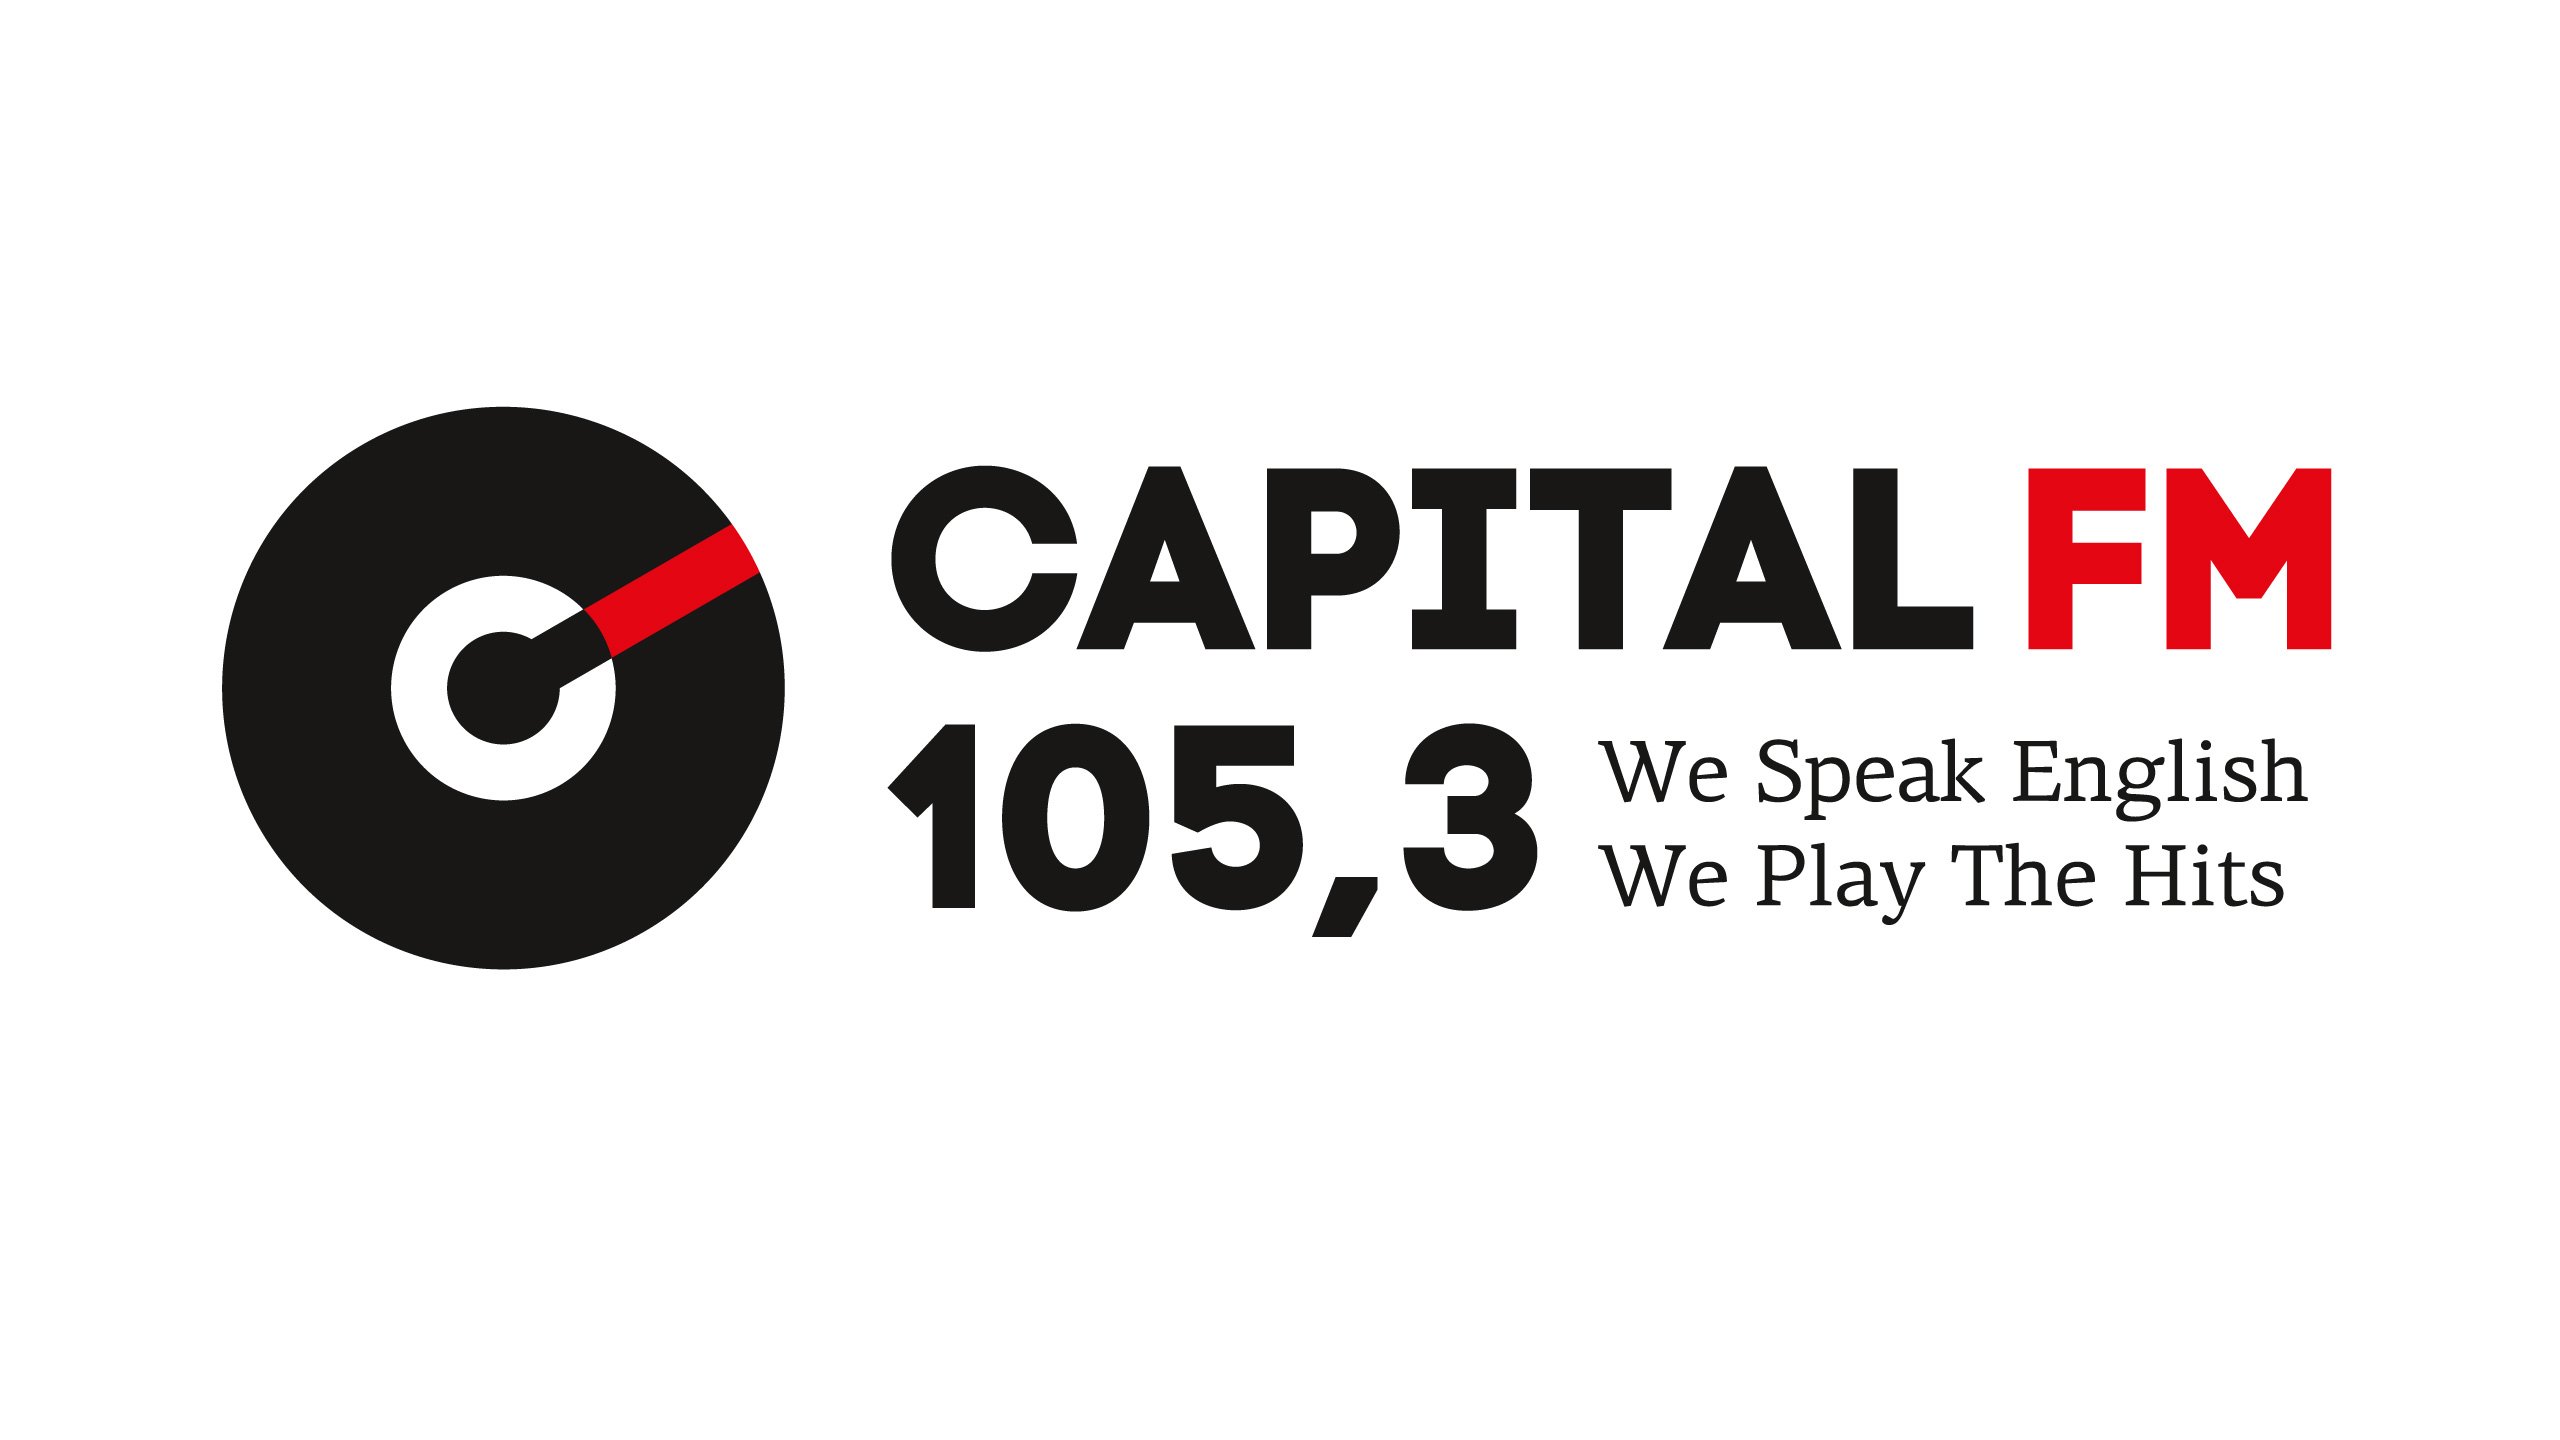 Hflbj av. Радио Capital fm. Радиостанция Capital логотип. Логотип радио Capital fm. Capital fm105.3.